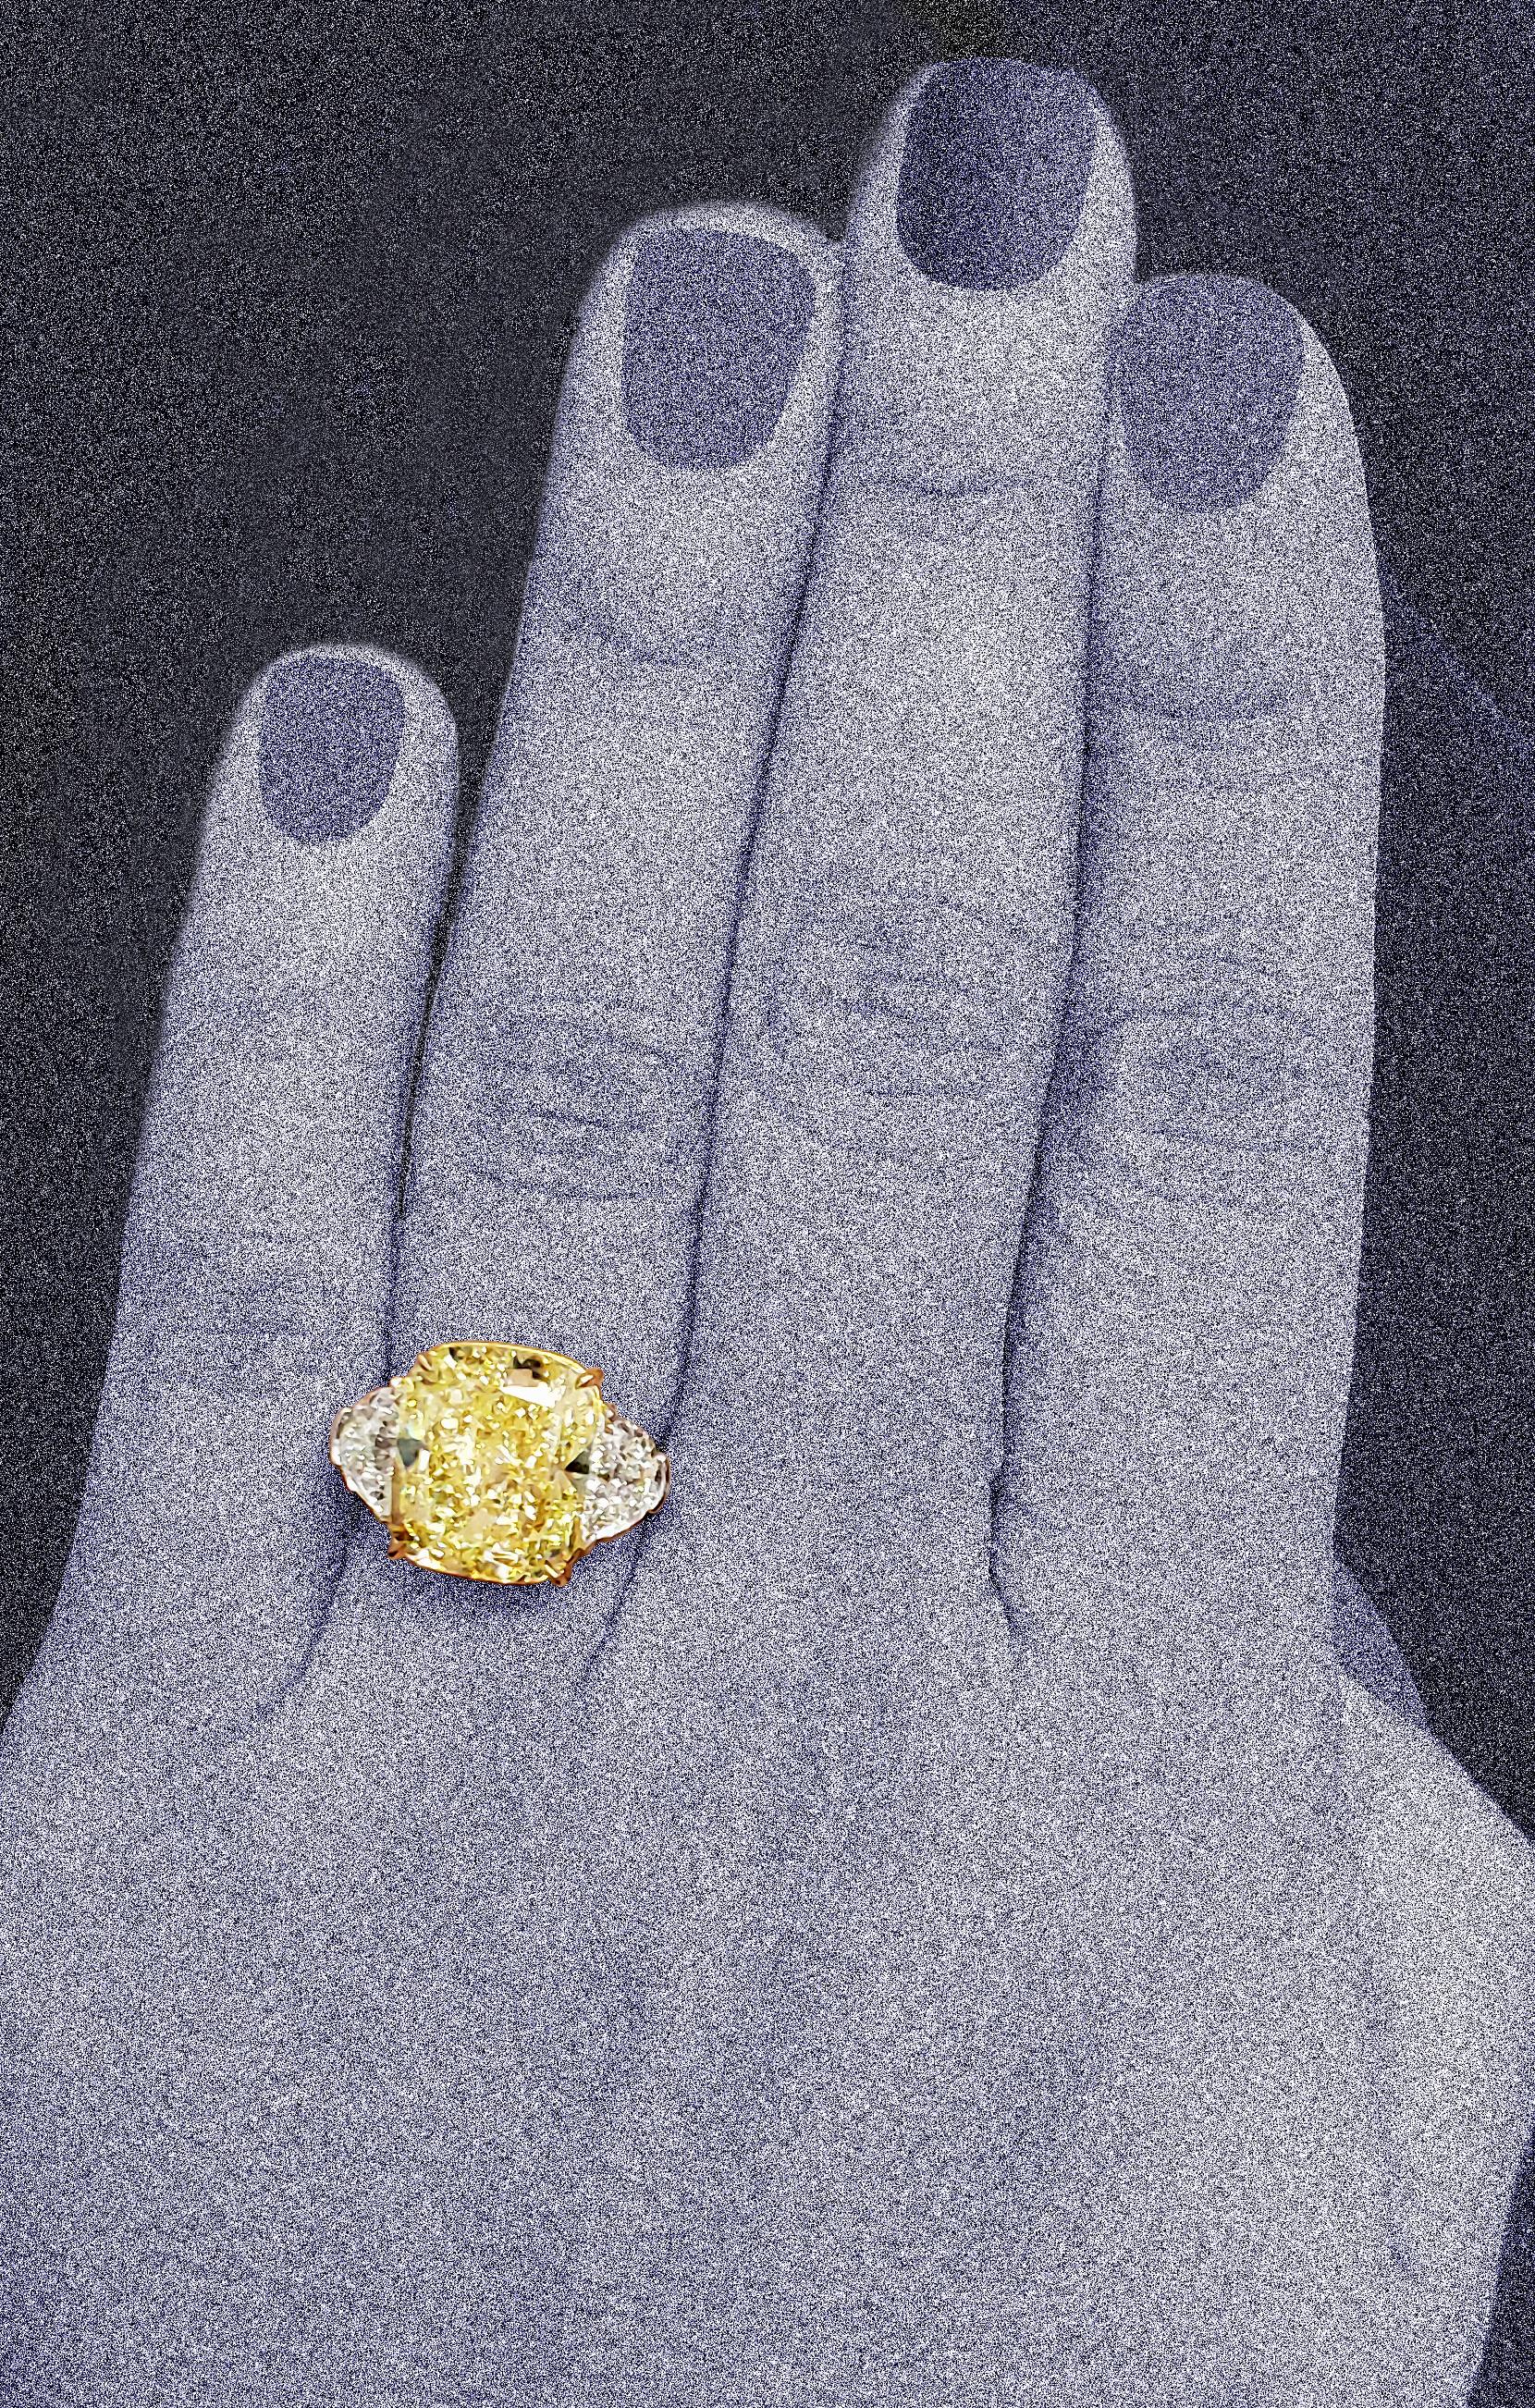 Sieraden Ringen Bruiloft & Verloving Verlovingsringen 5.03 Ct TW Exquisite Fancy Light Yellow Diamond Ring 4.40 Ct Cushion Shape GIA Certified 2215461851 Elegant Dainty Jewelry Gift For Women 